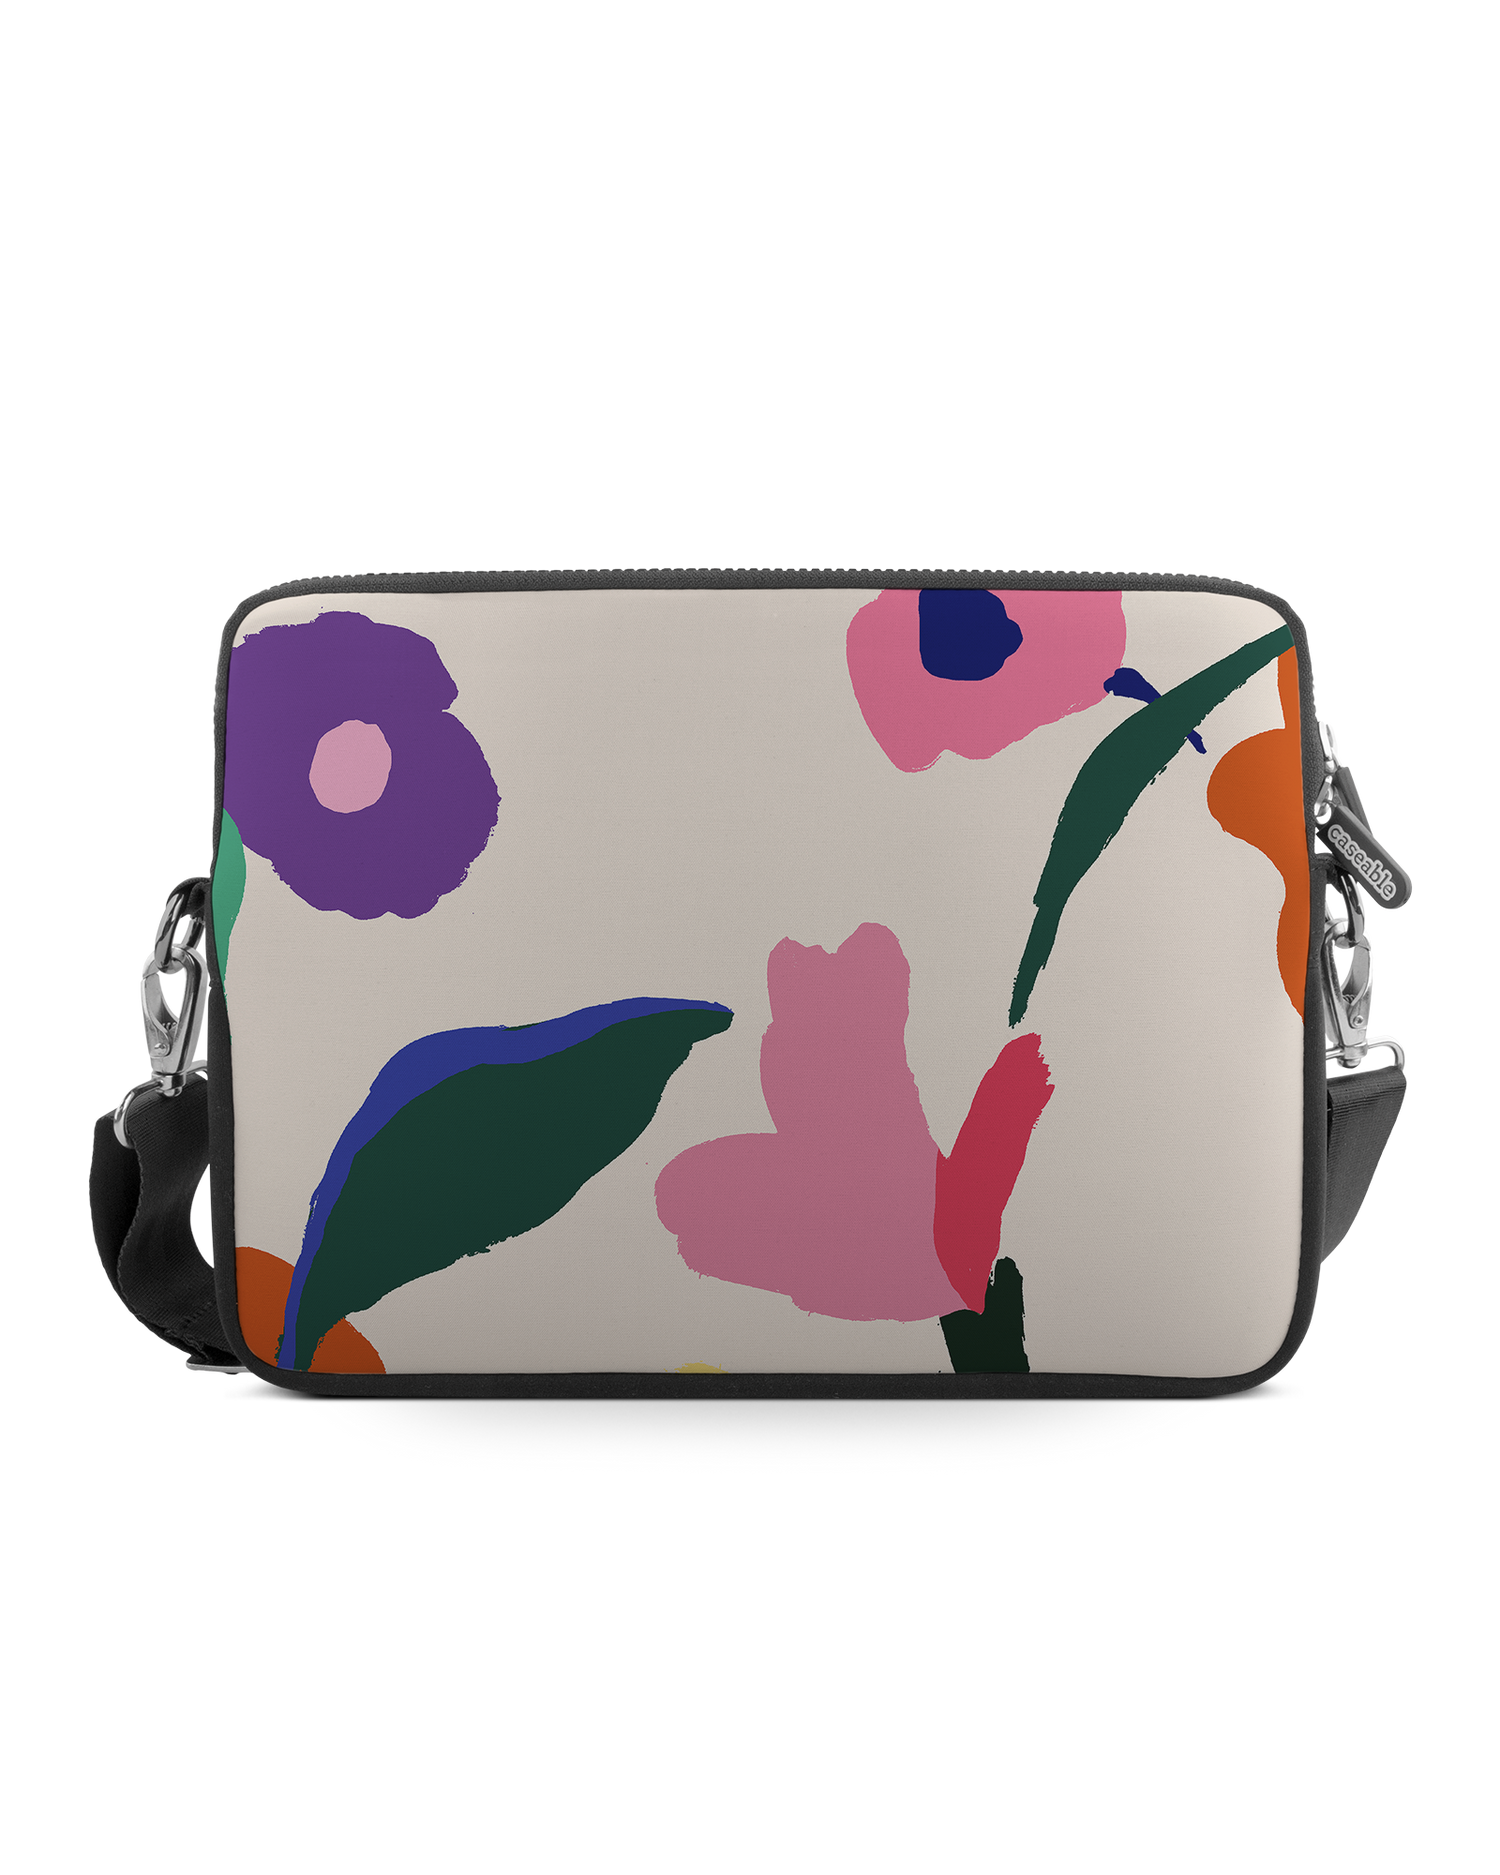 Handpainted Blooms Premium Laptop Bag 17 inch: Front View